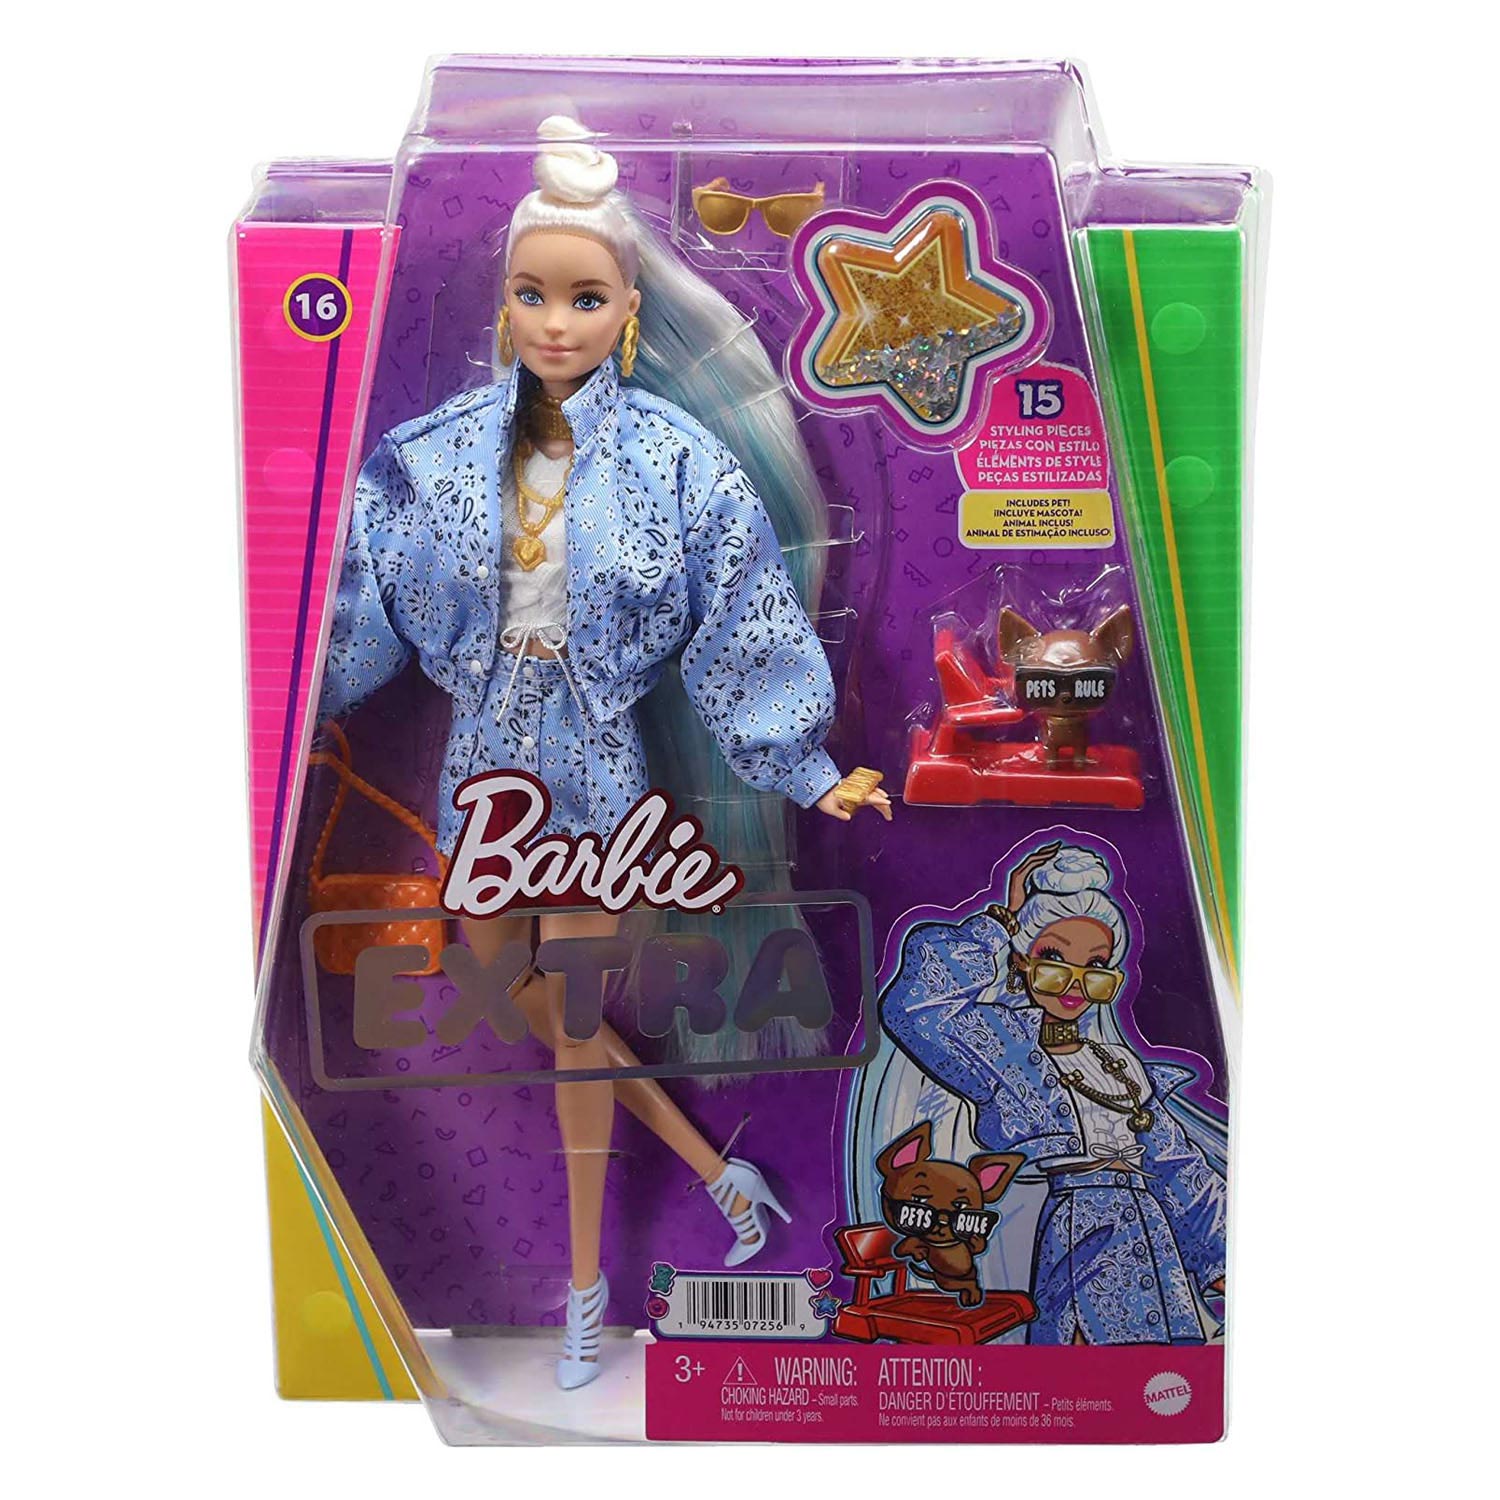 Barbie Extra Doll 16 – Blondes Bandana